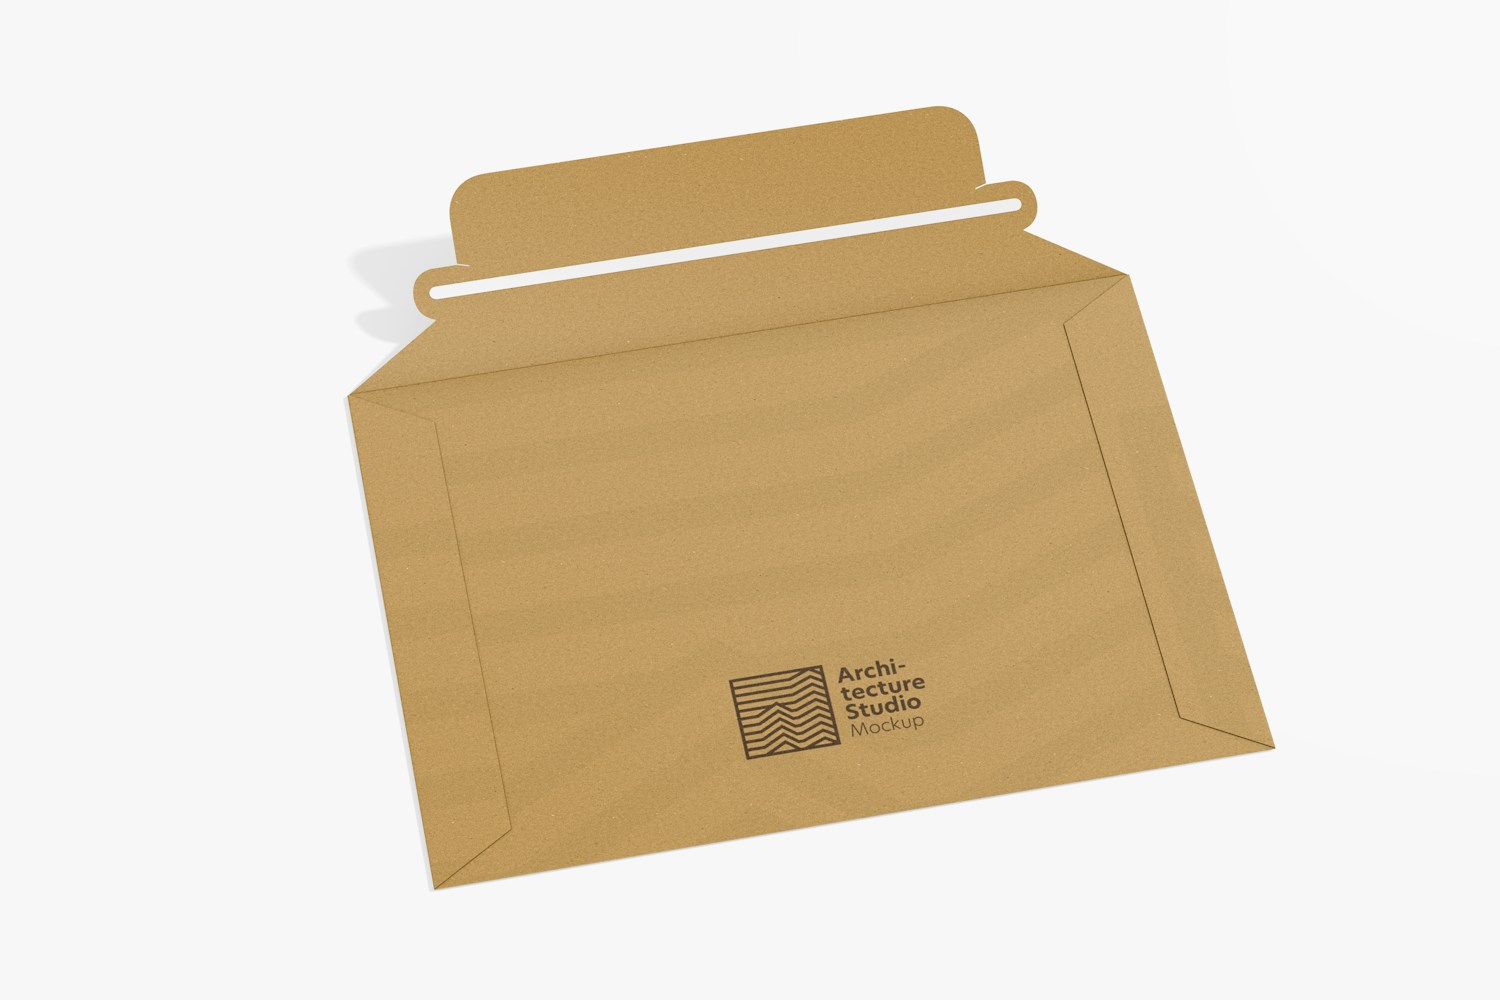 A3 Rigid Cardboard Envelope Mockup, Opened